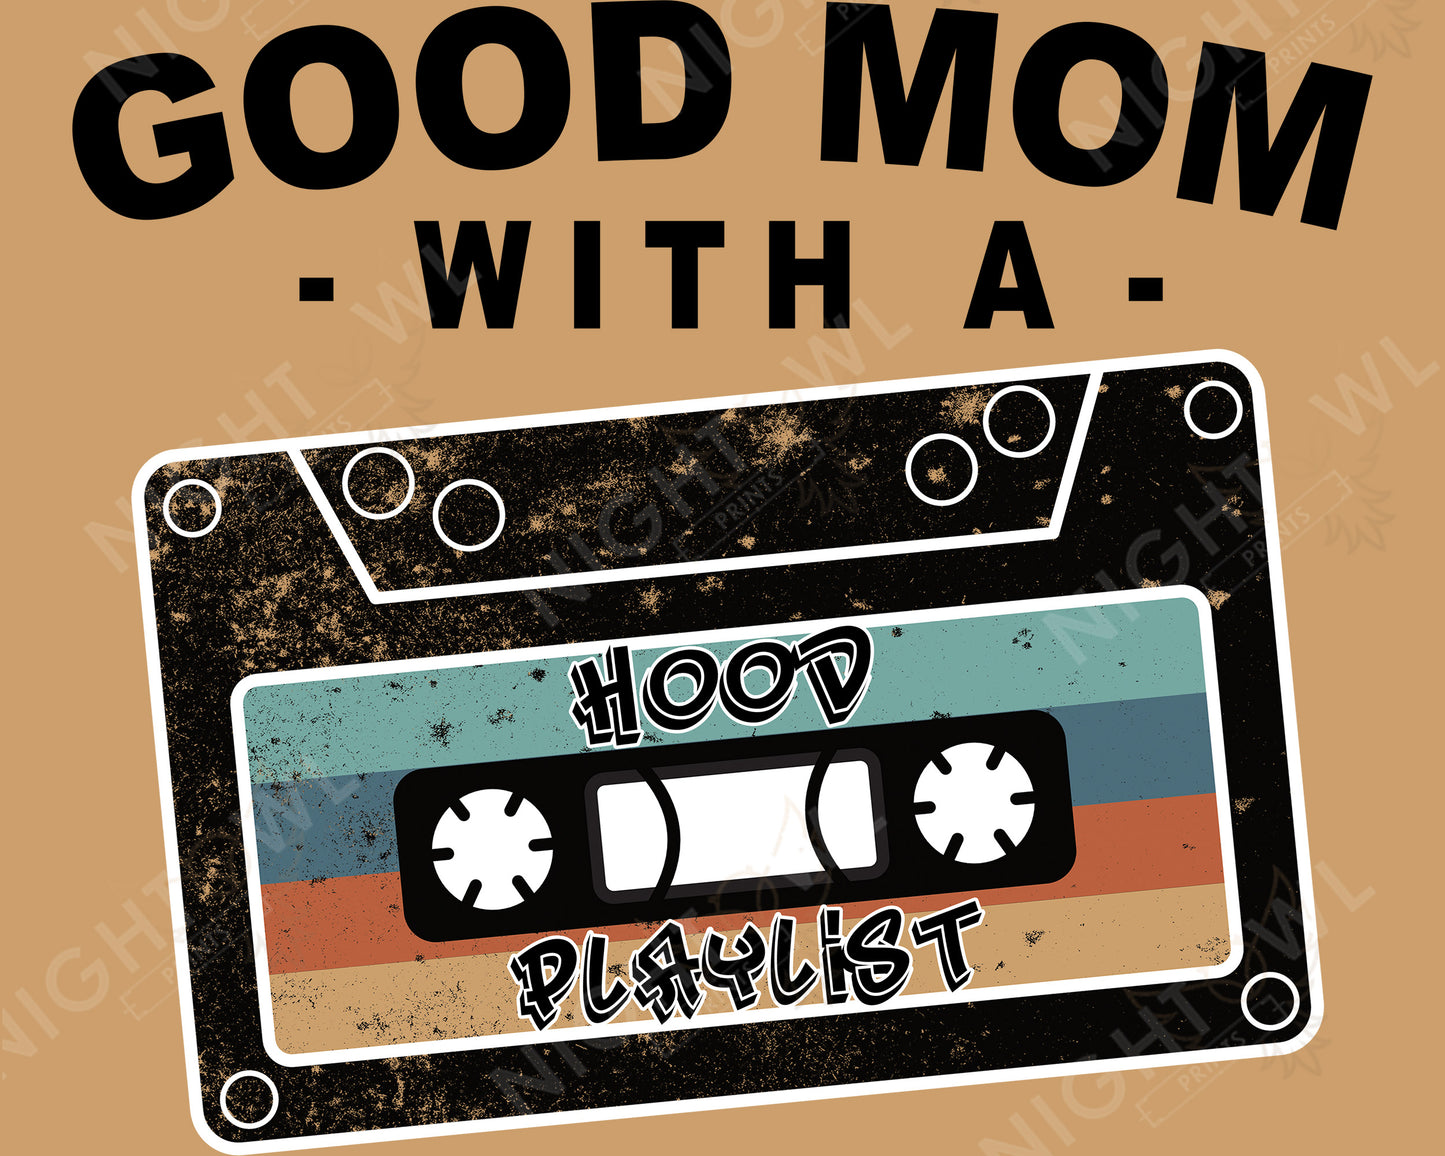 Good Mom with a hood playlist DTF Transfer.